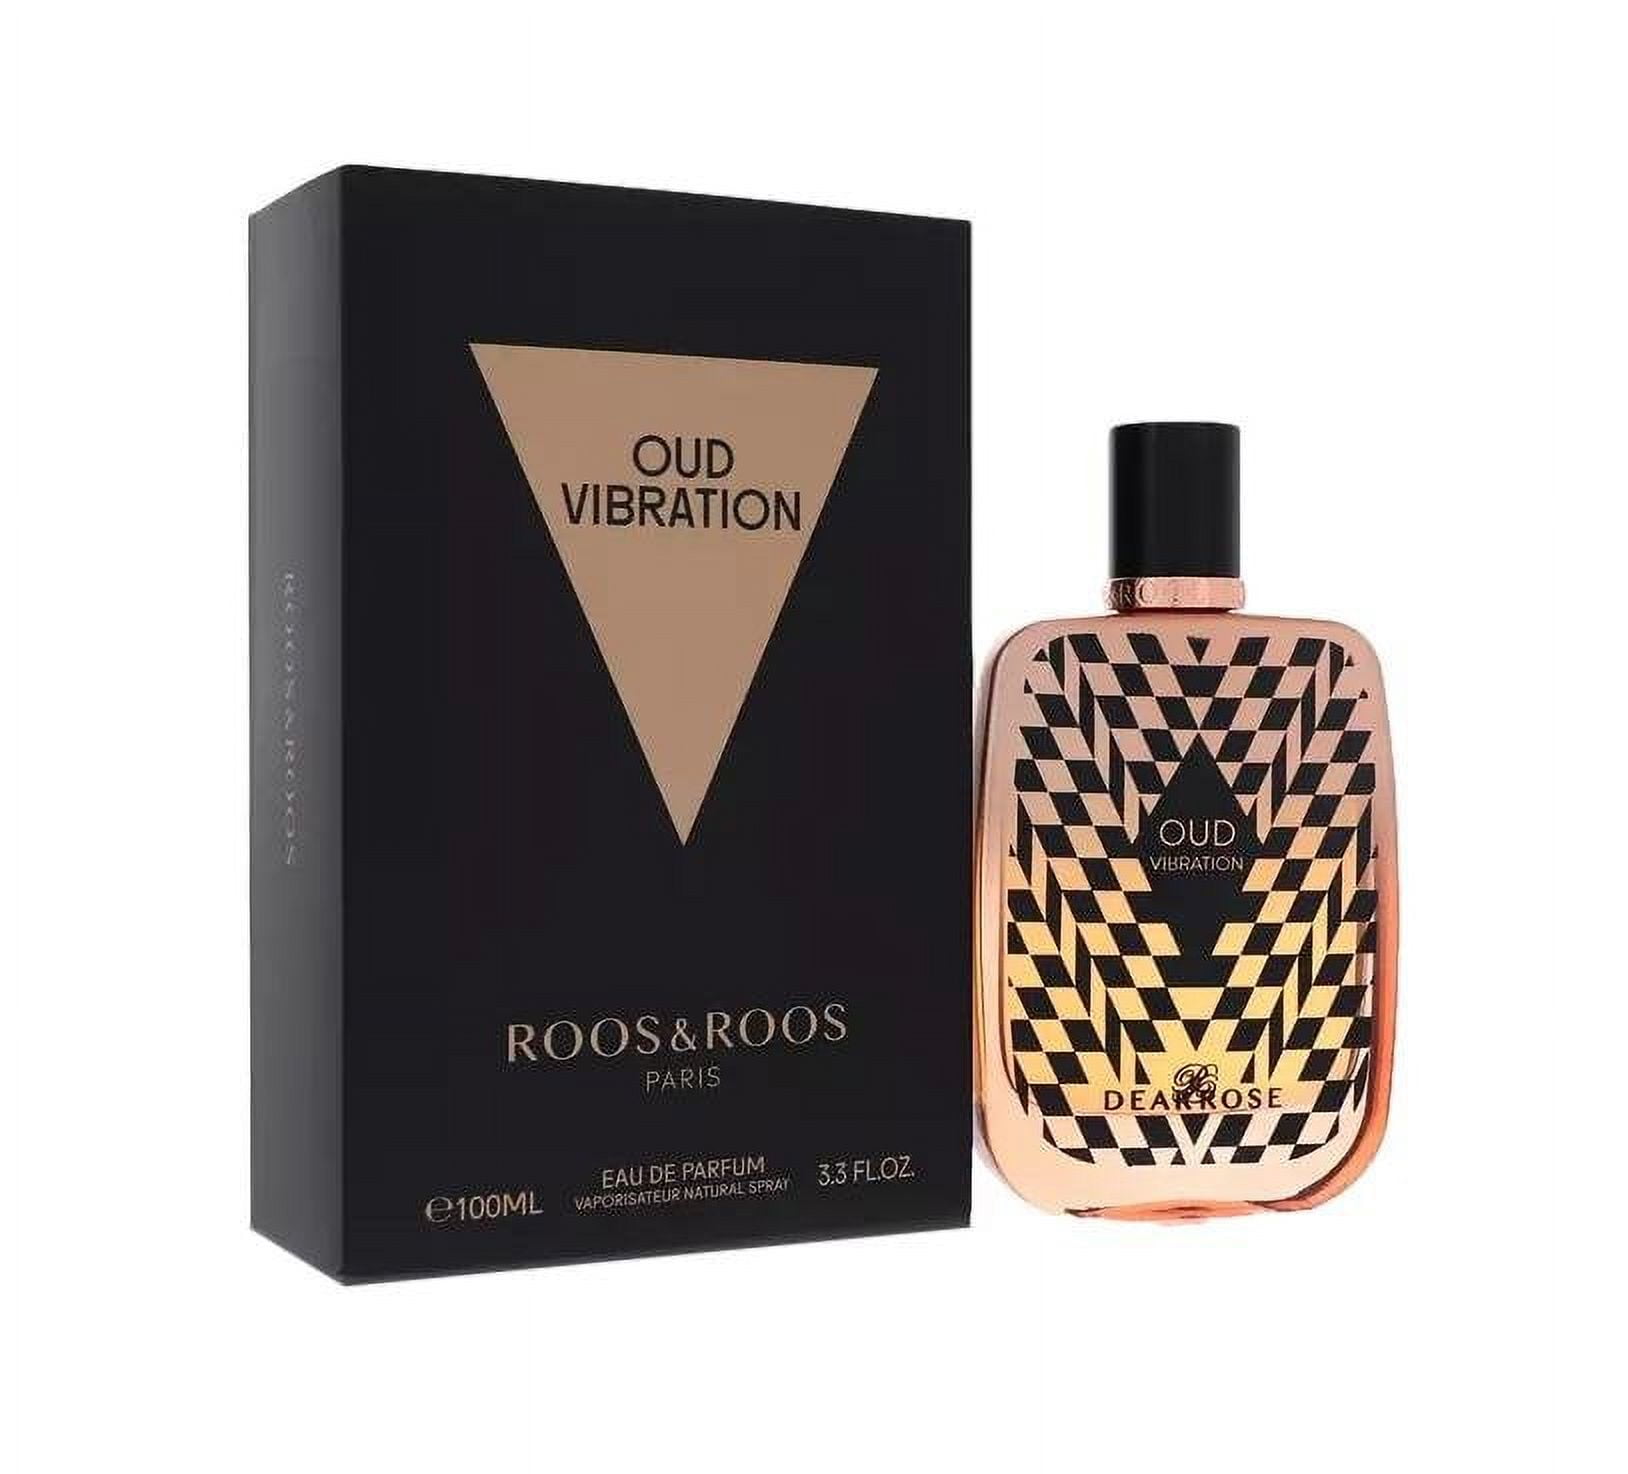 Avon's Women's Eau De Parfum Spray LYRD Oud Rose 1.7 Fl